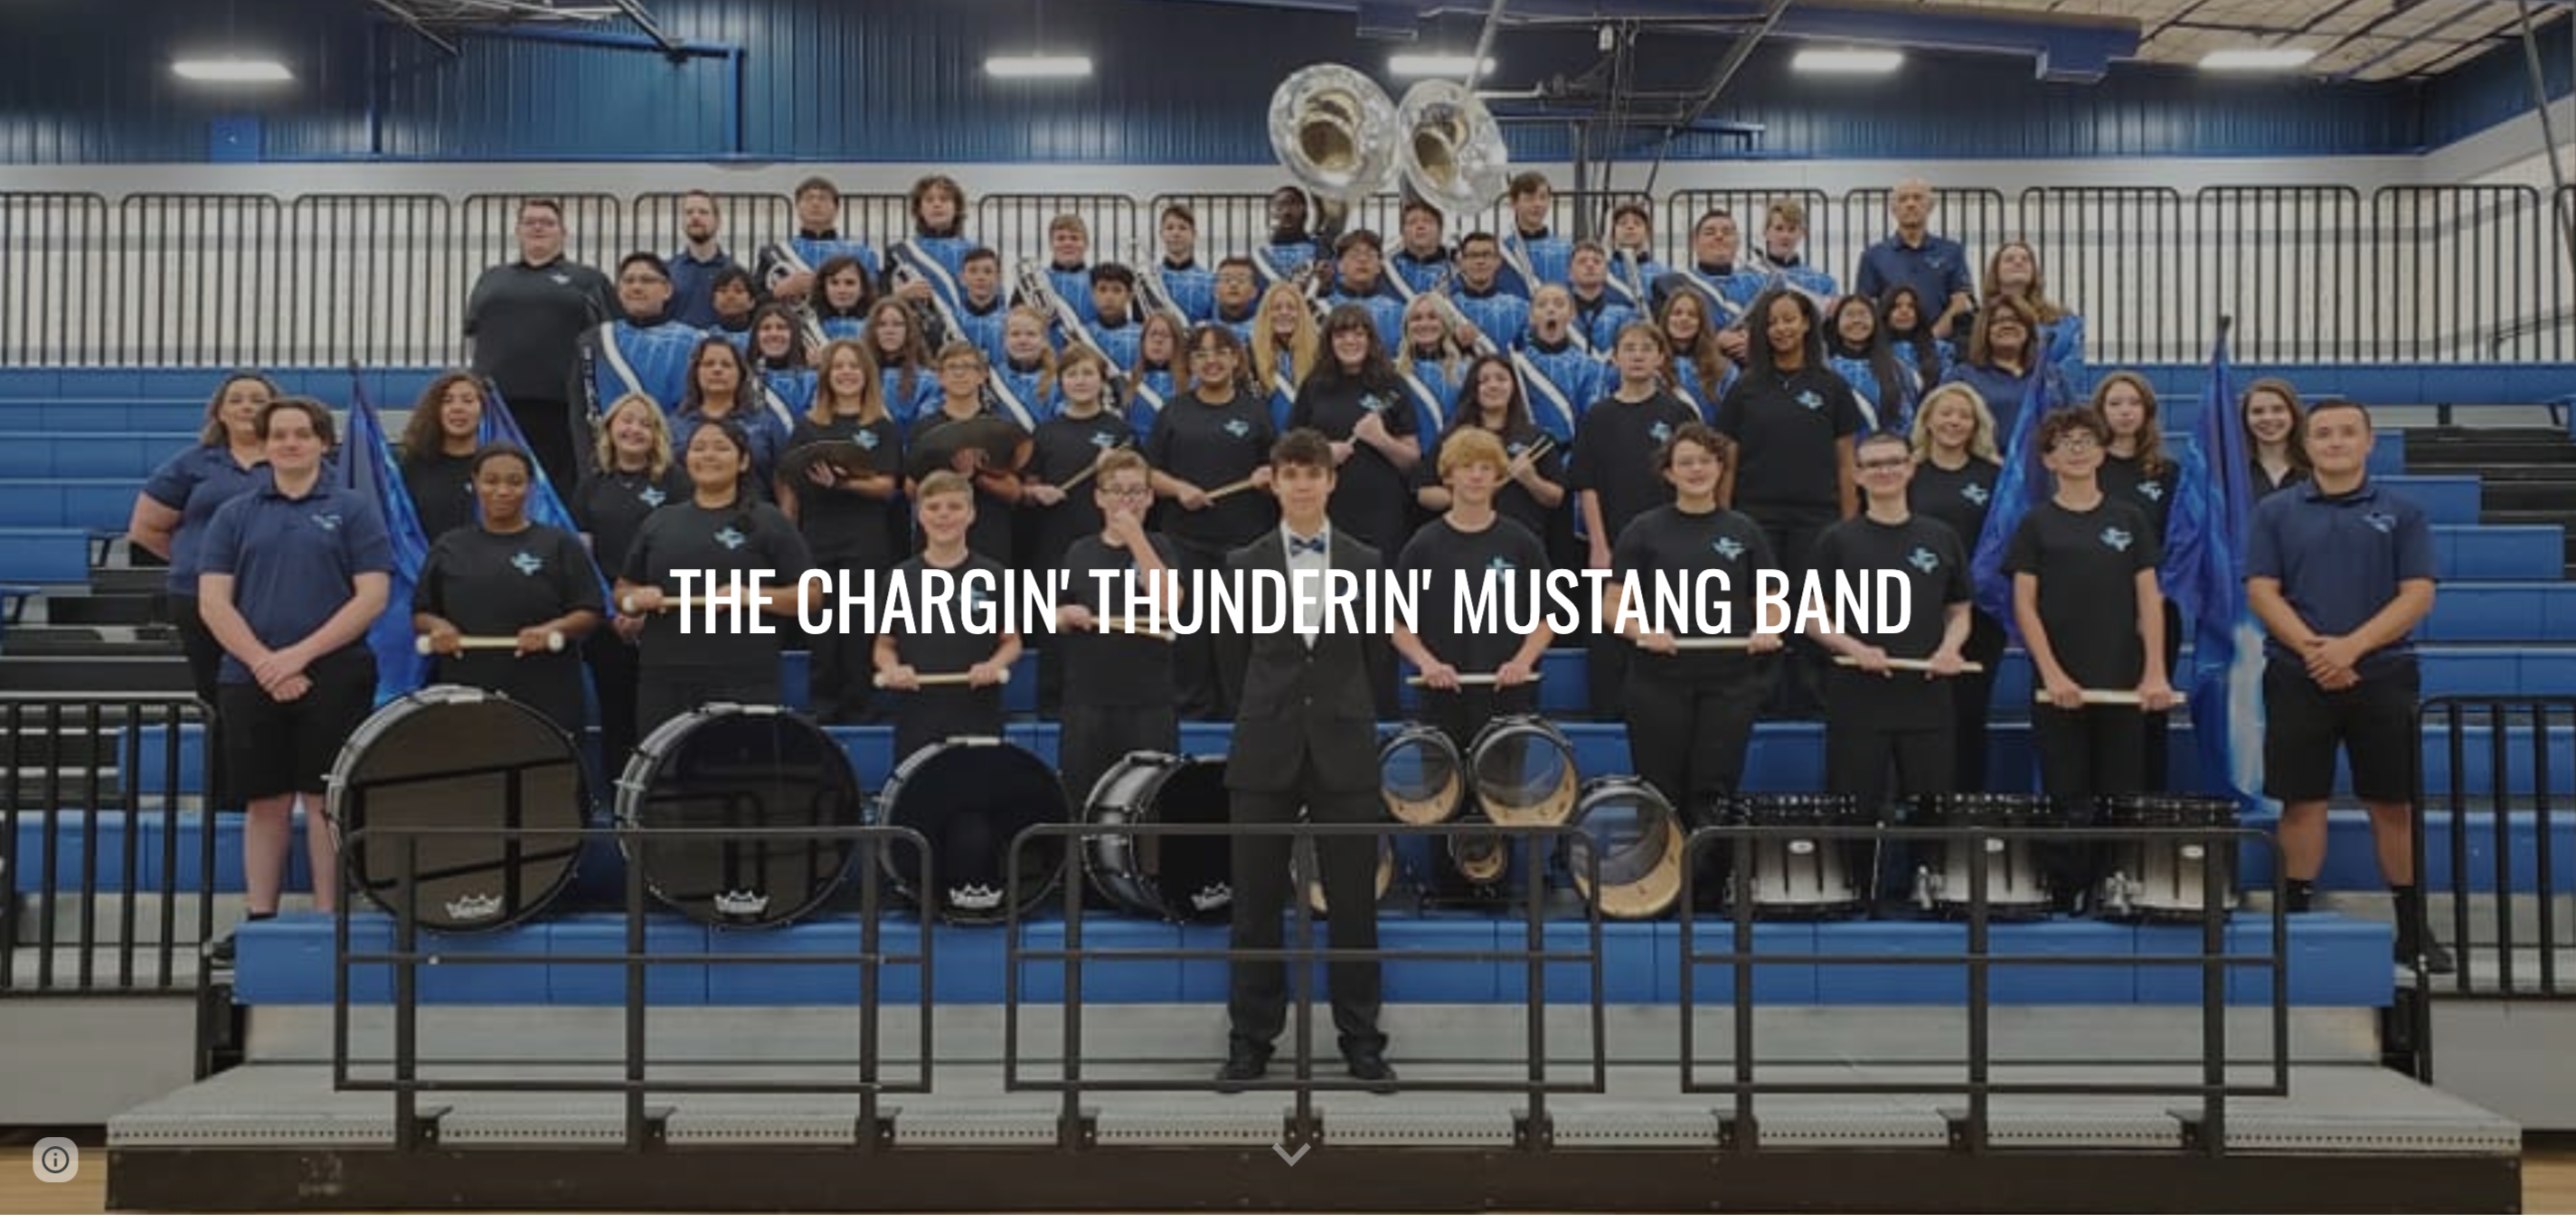 The Chargin' Thunderin' Mustang Band